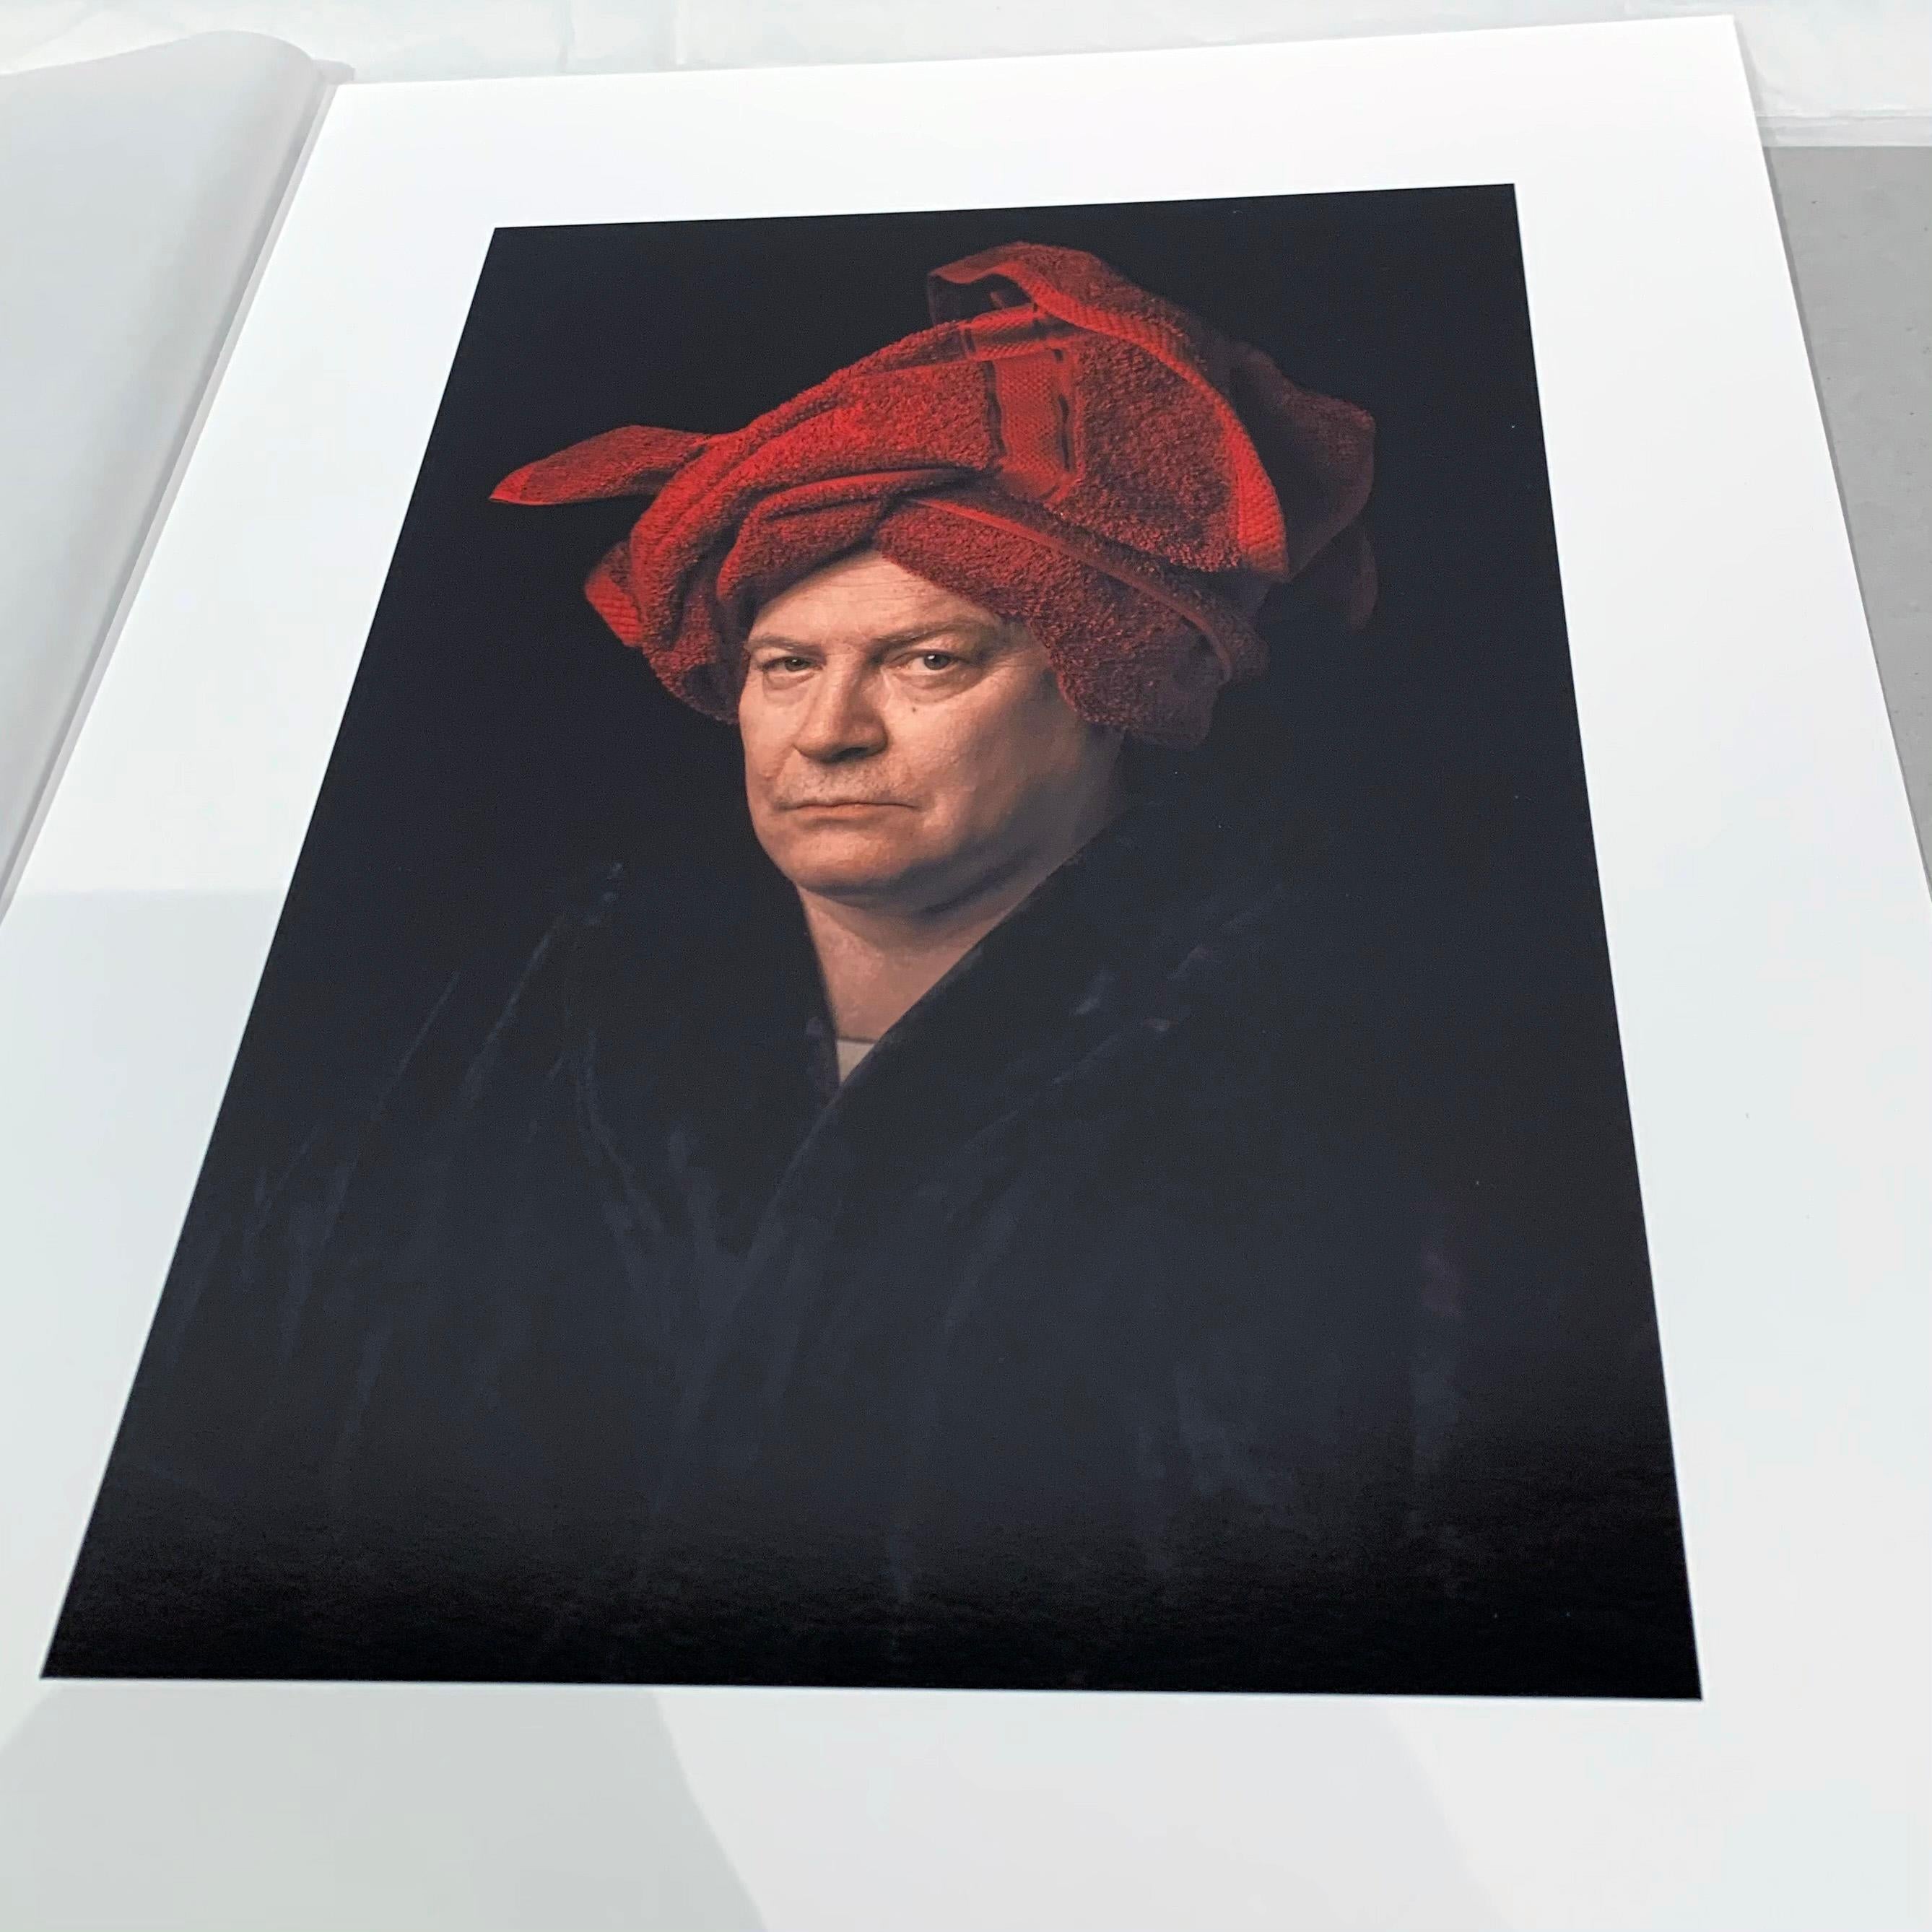 Jan van Eyck-Portrait of a Man 1433 (2021) - Black Portrait Print by George McLeod